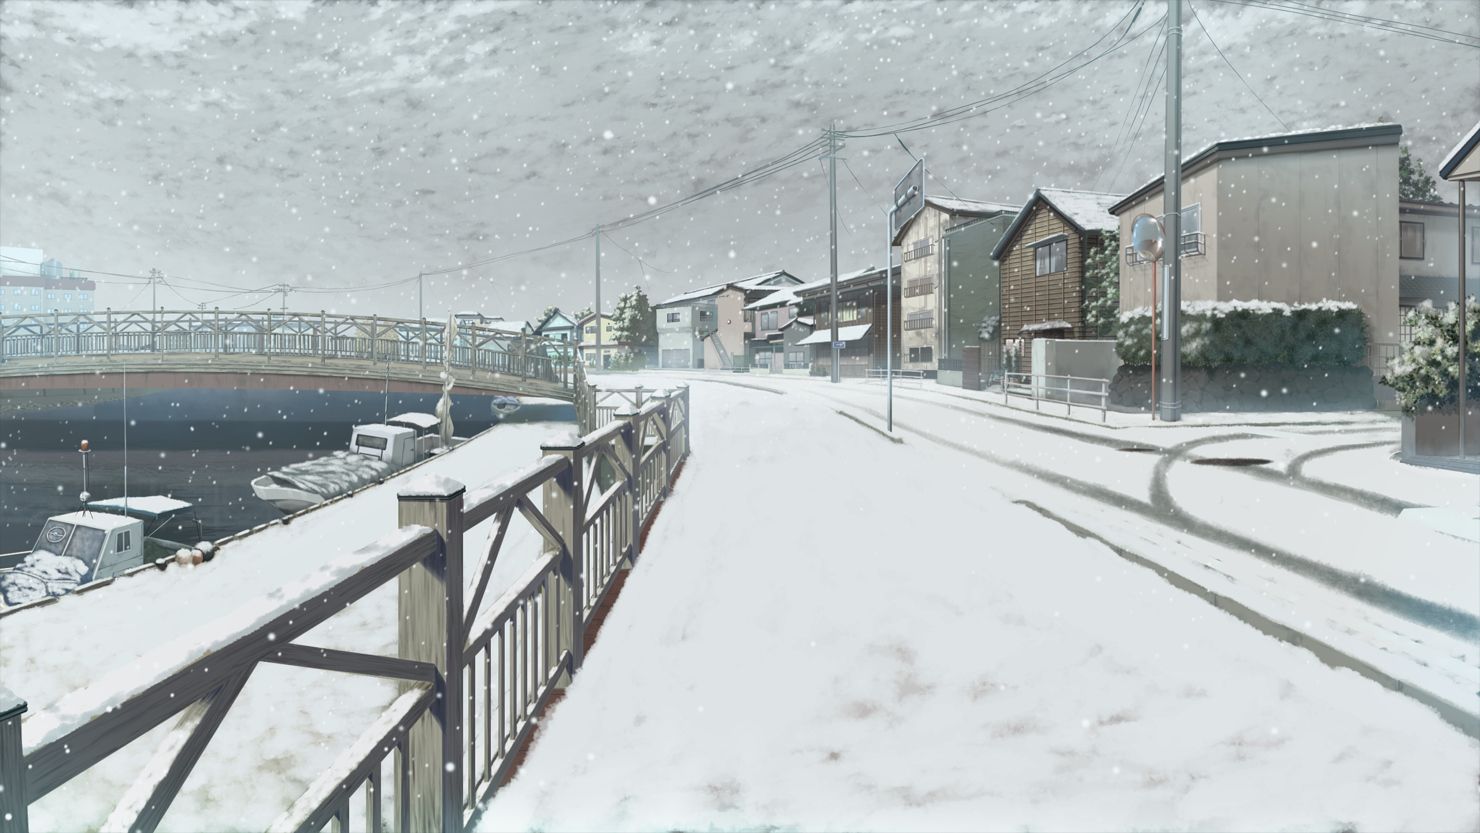 Cityscape City Snow Town Anime Scenery Background Wallpaper. Anime scenery, Scenery wallpaper, Winter scenery